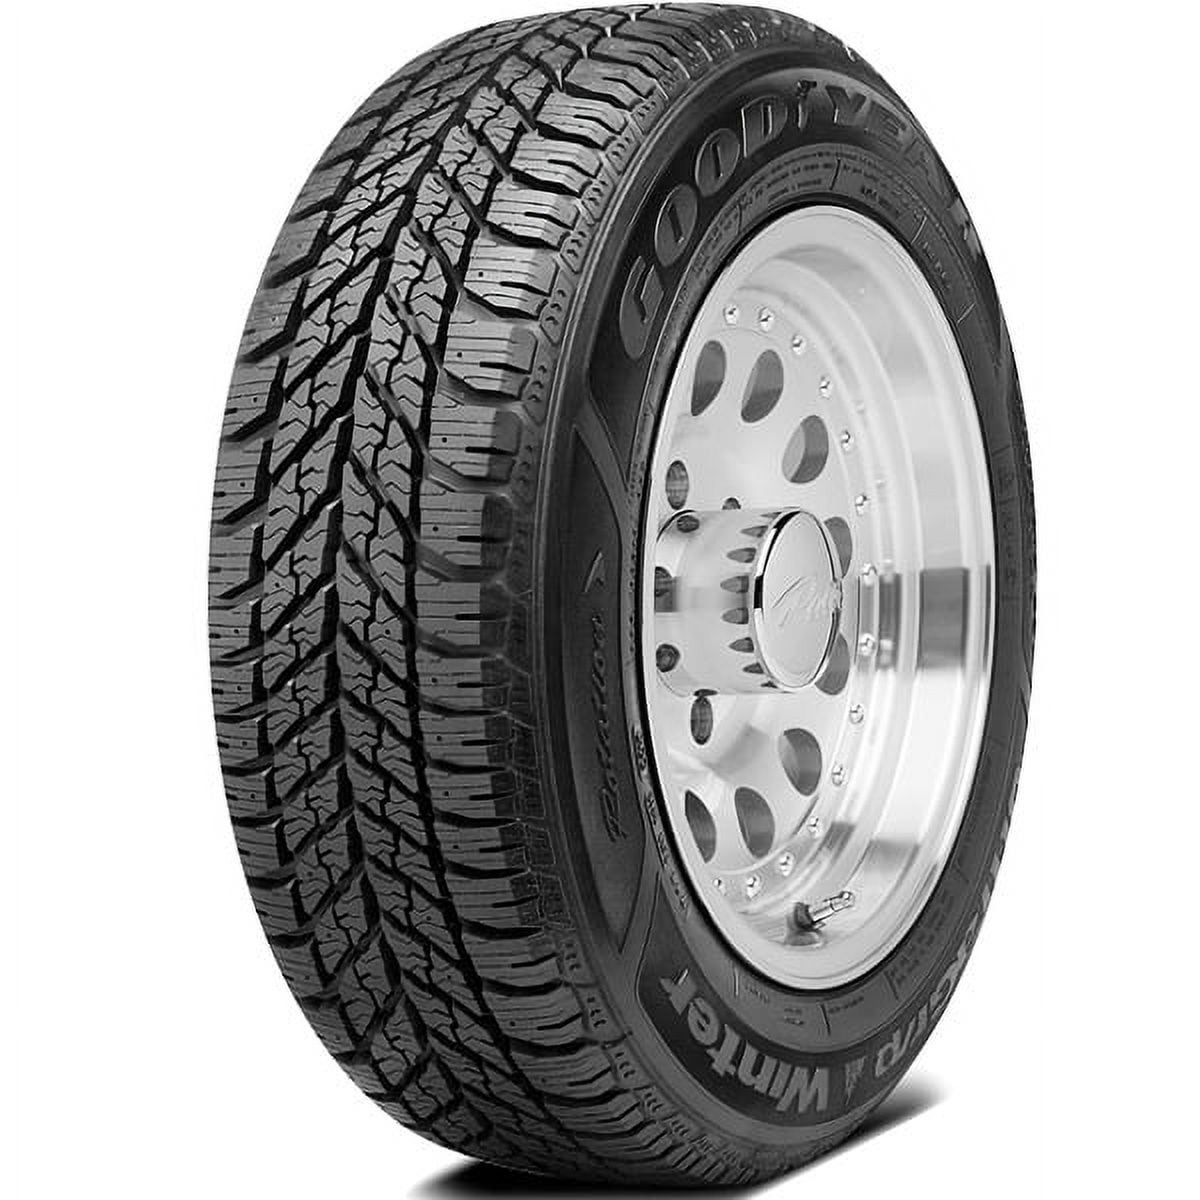 Goodyear Ultra Grip Winter 235/65R17 104 T Tire